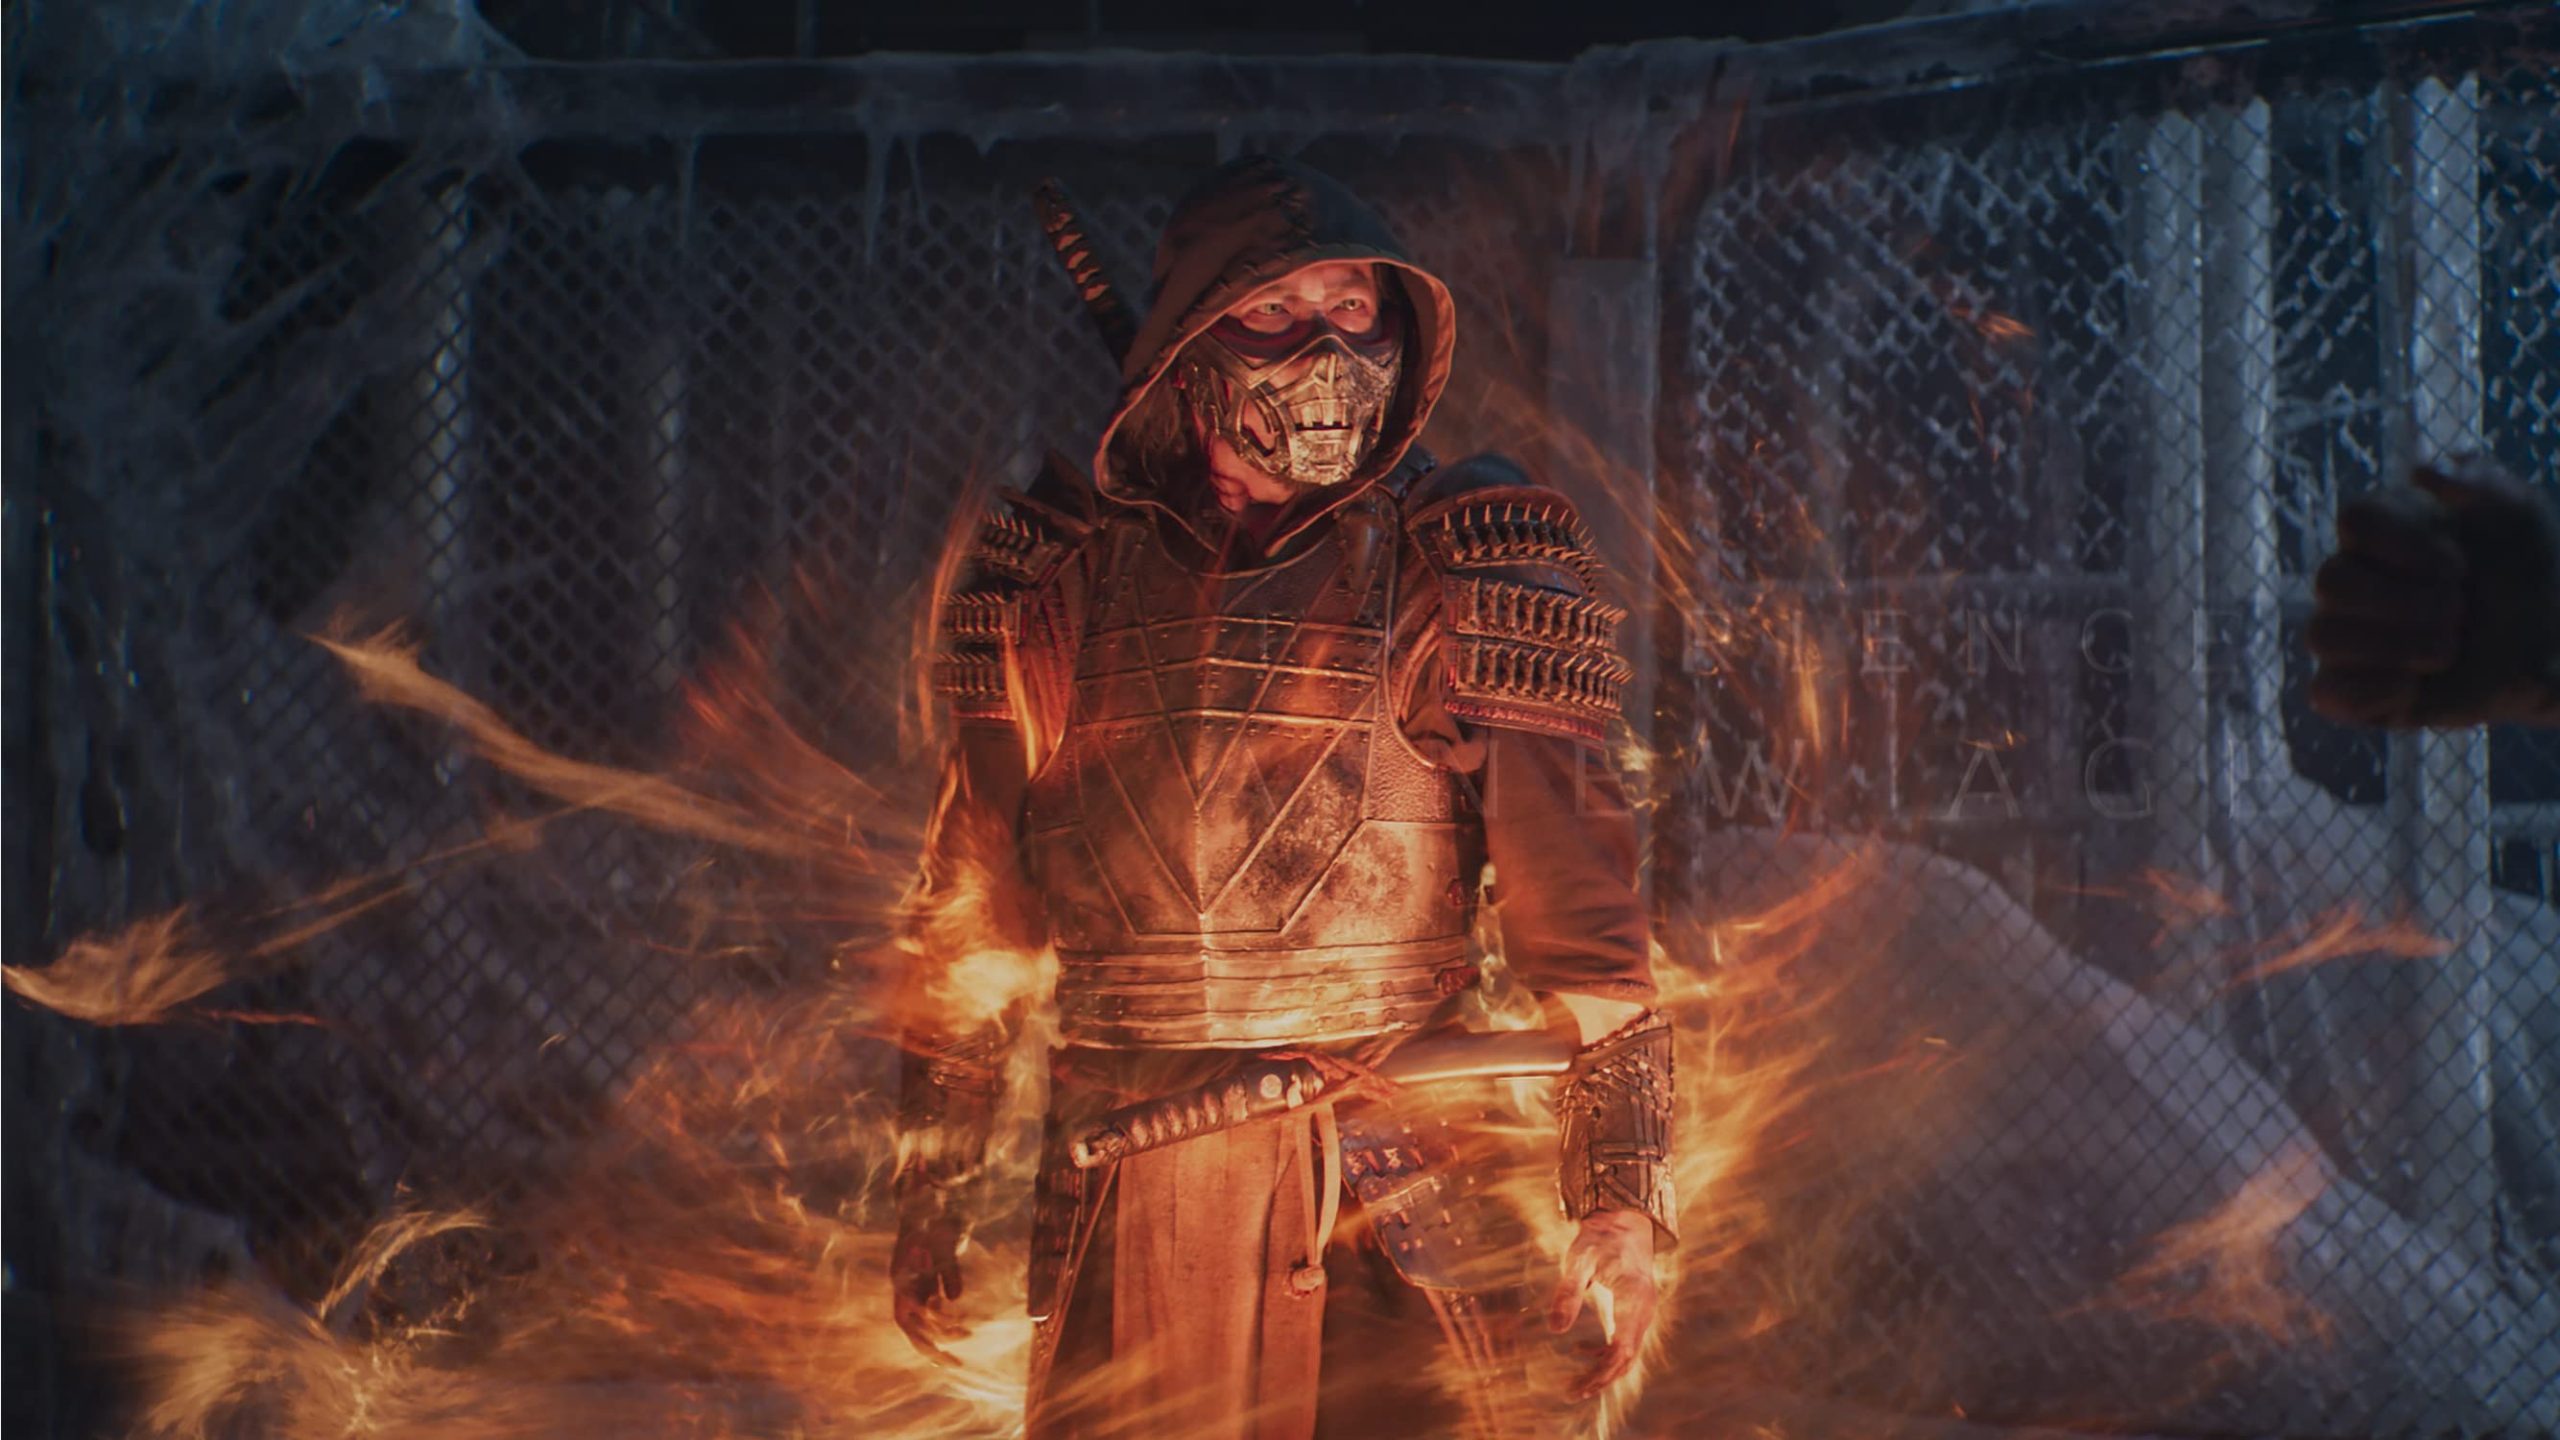 Scorpion (Hiroyuki Sanda) erupts in a plume of fire in a still from the New Line Cinemas film "Mortal Kombat."